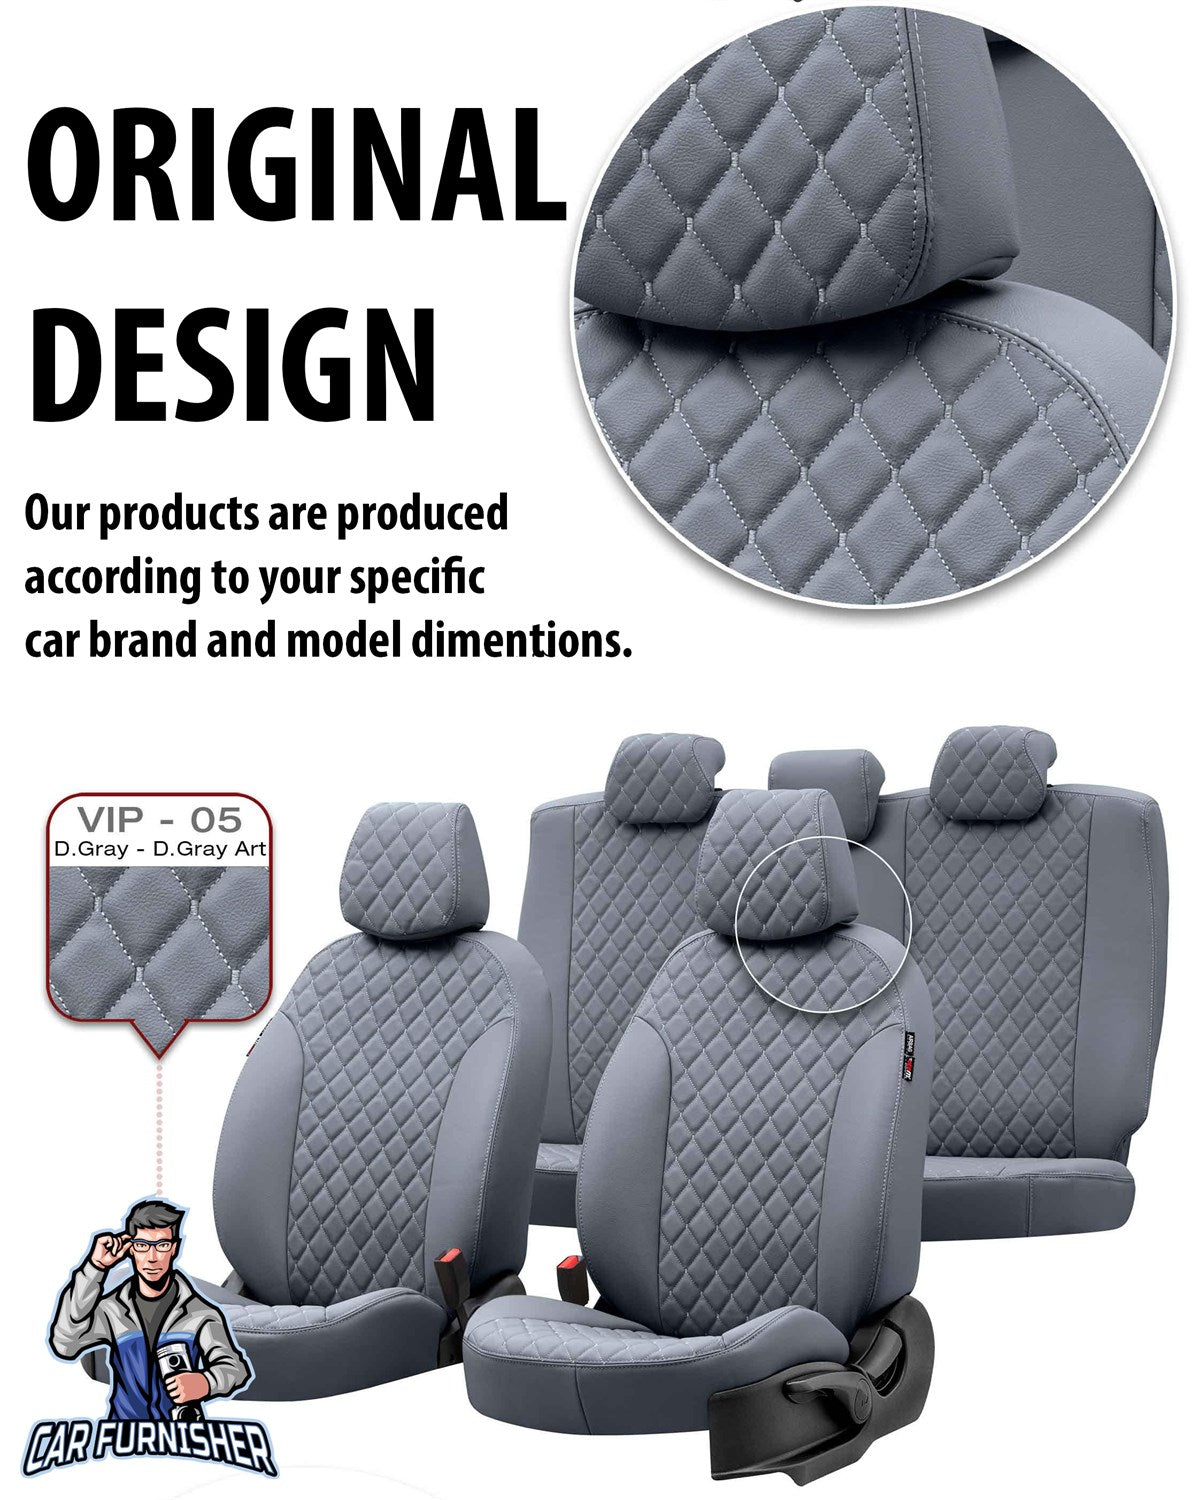 Honda Jazz Seat Covers Madrid Leather Design Beige Leather